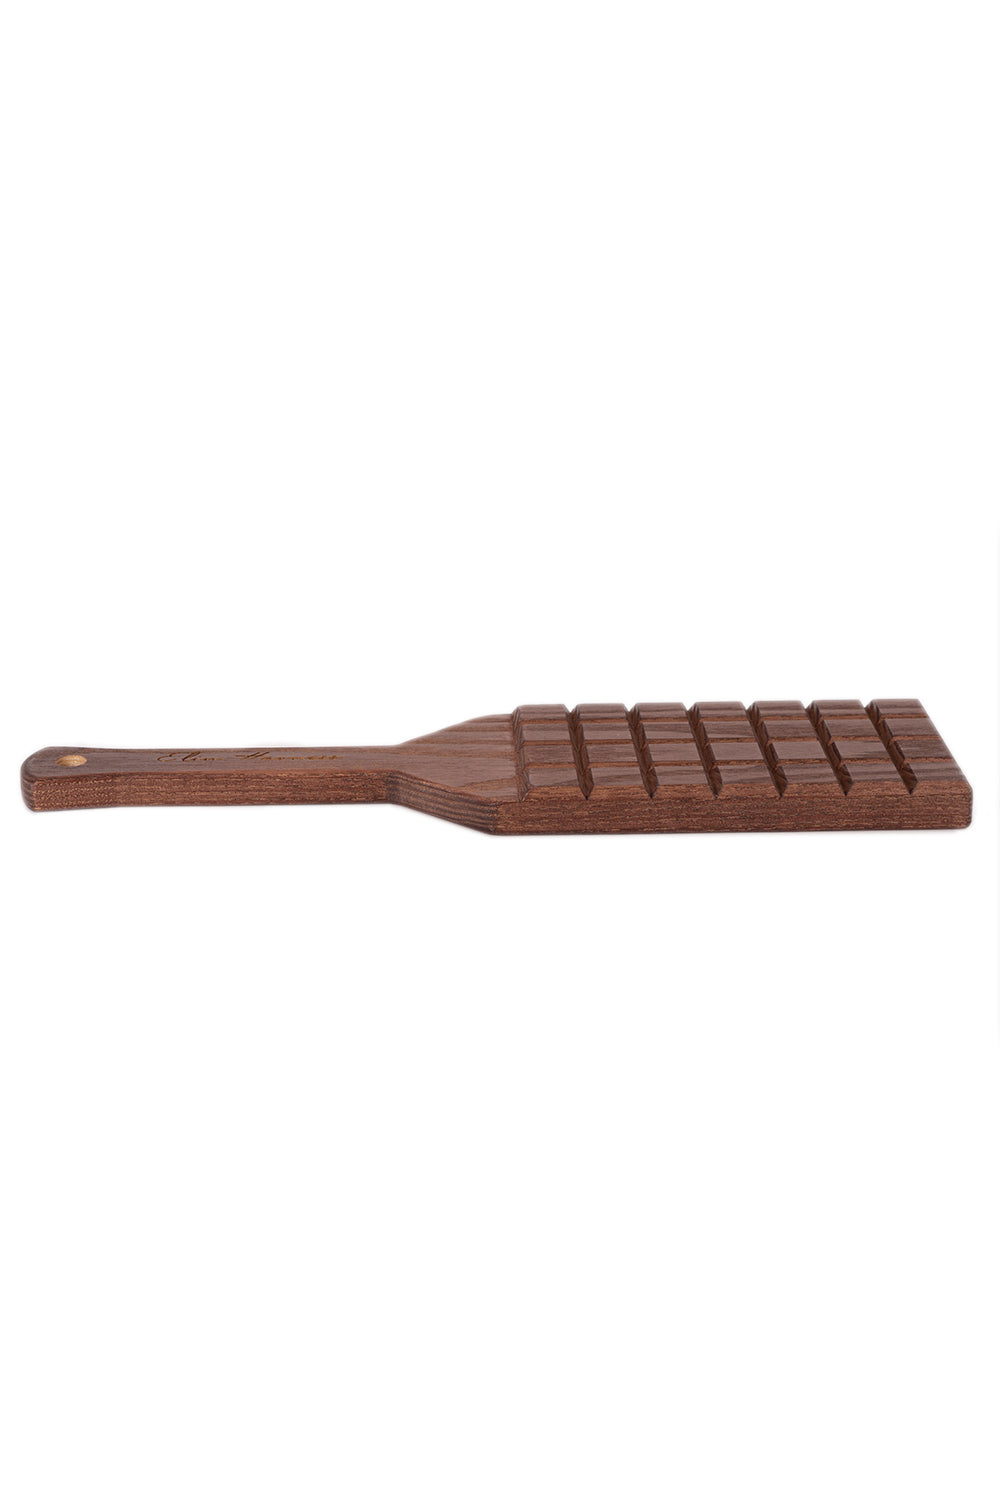 BDSM Wooden Spanking Paddle - Chocolate